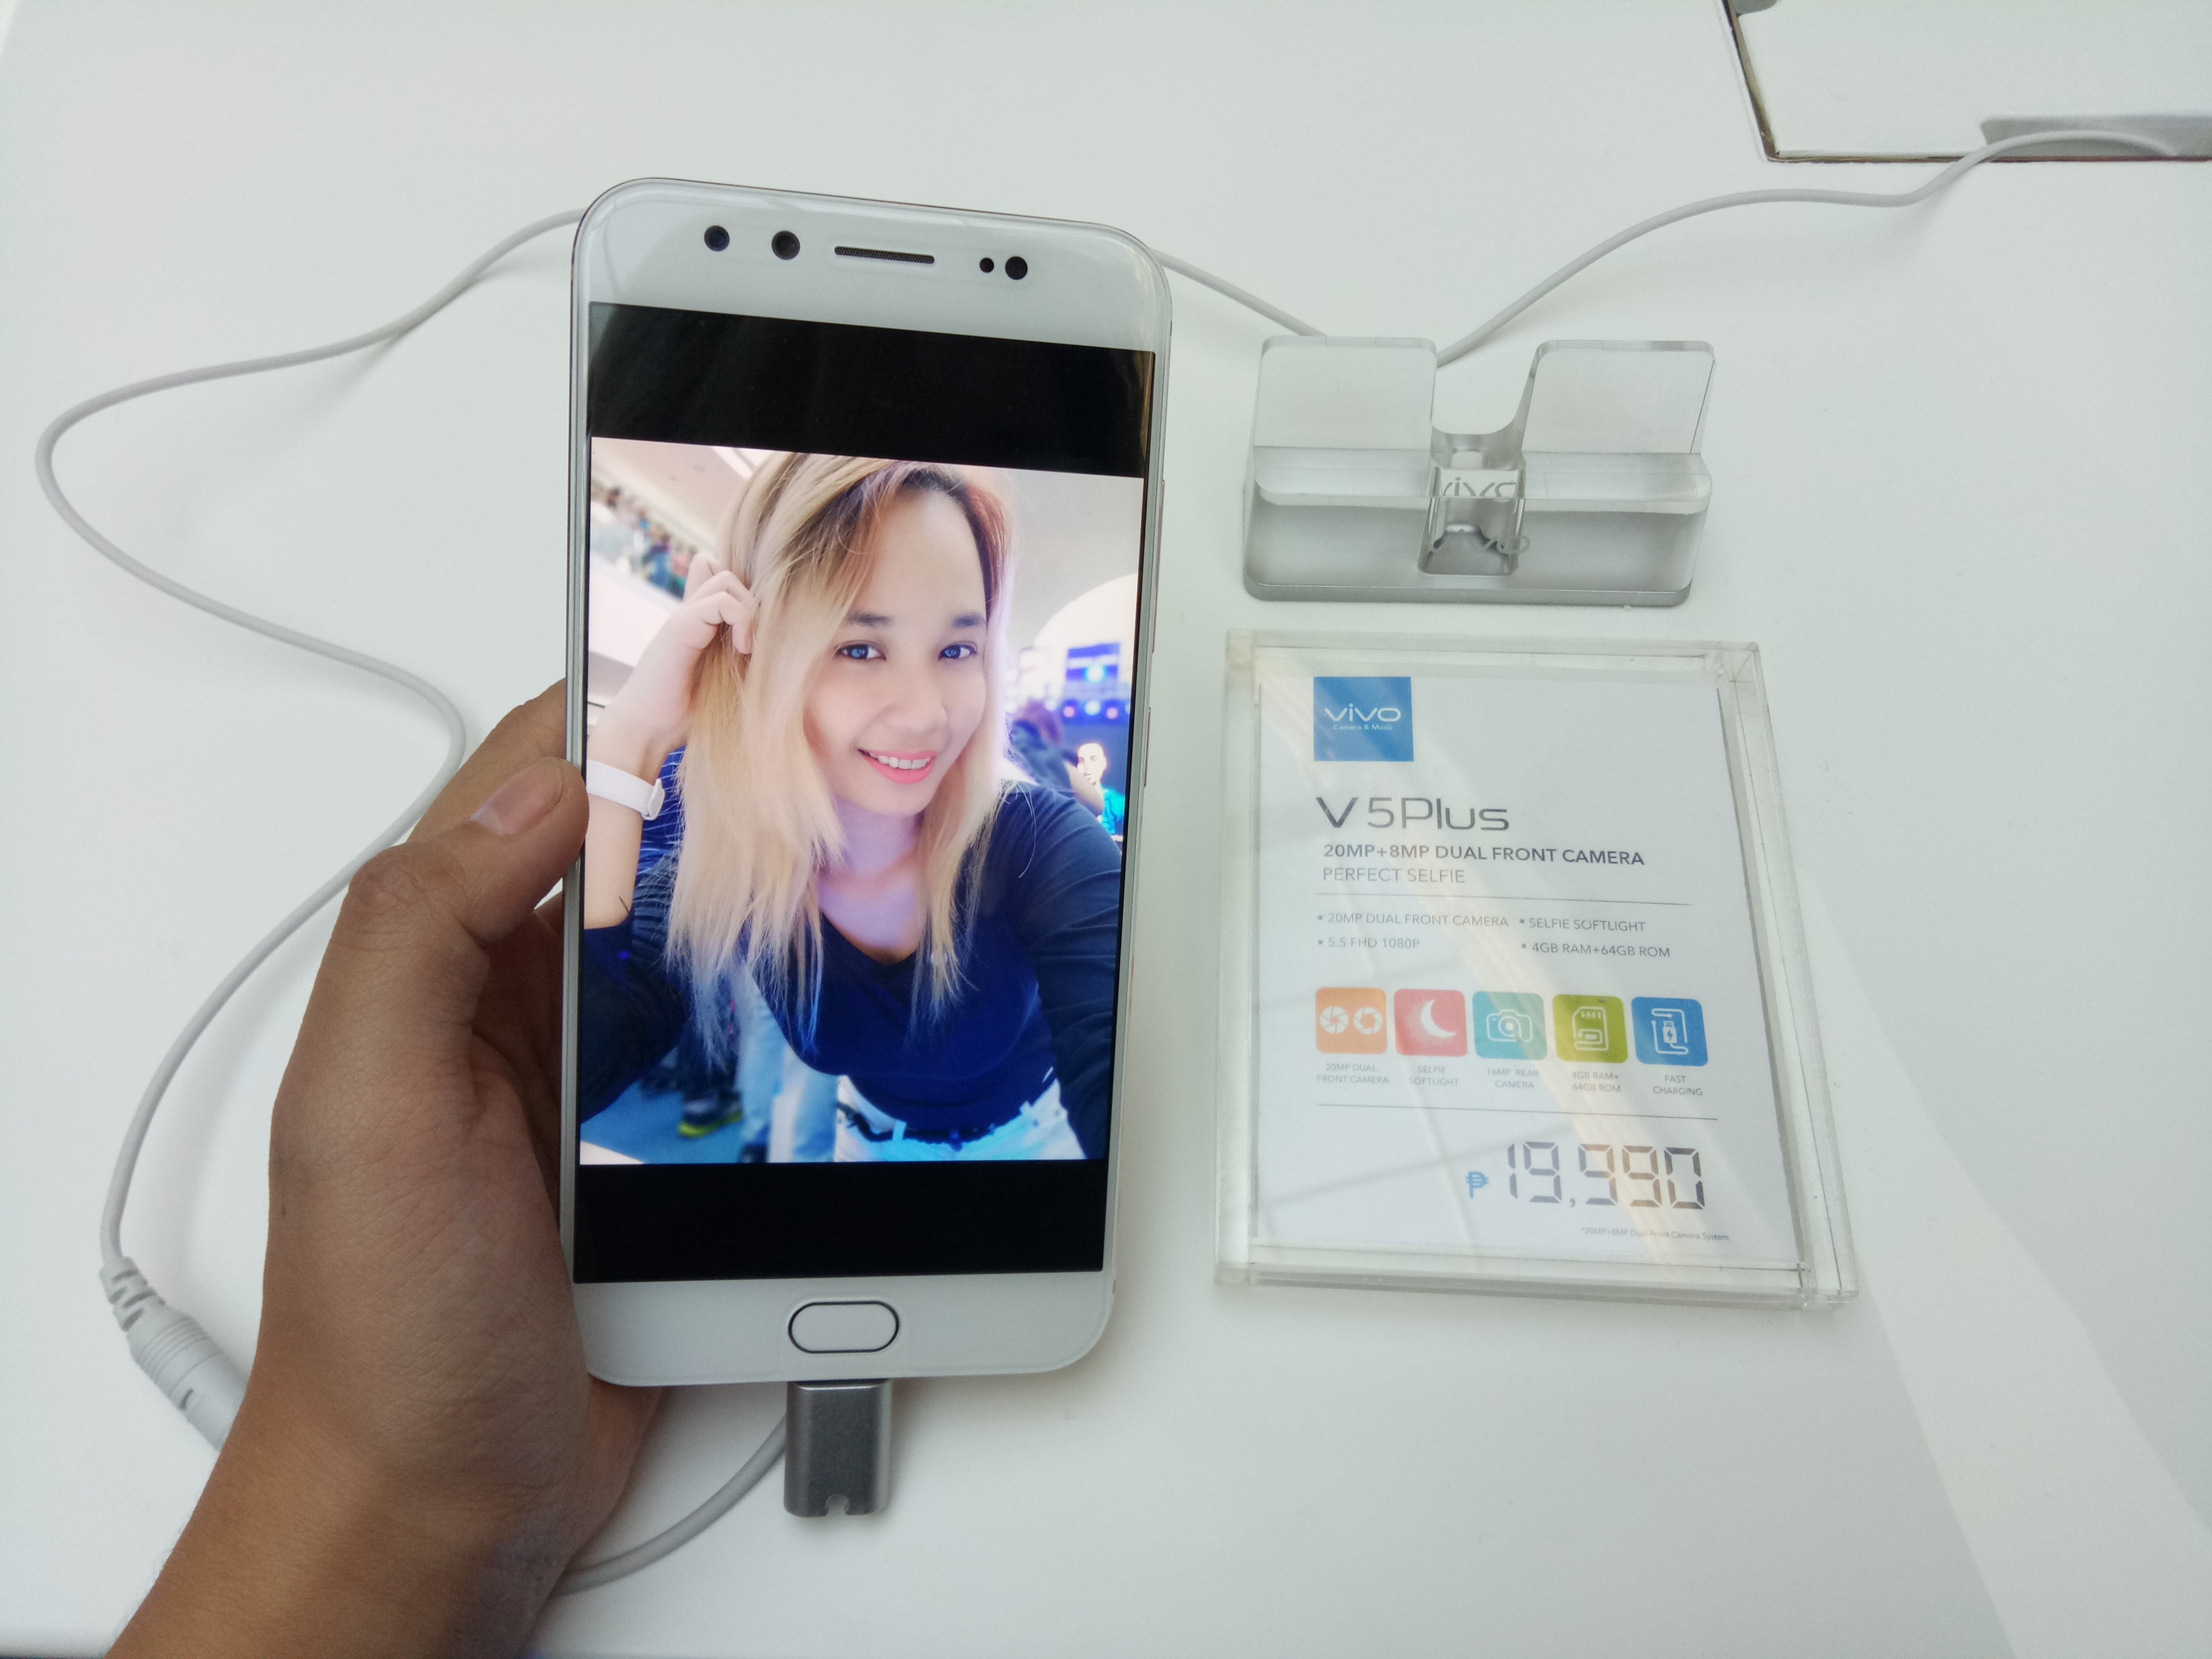 Selfie shot using the new Vivo V5 Plus